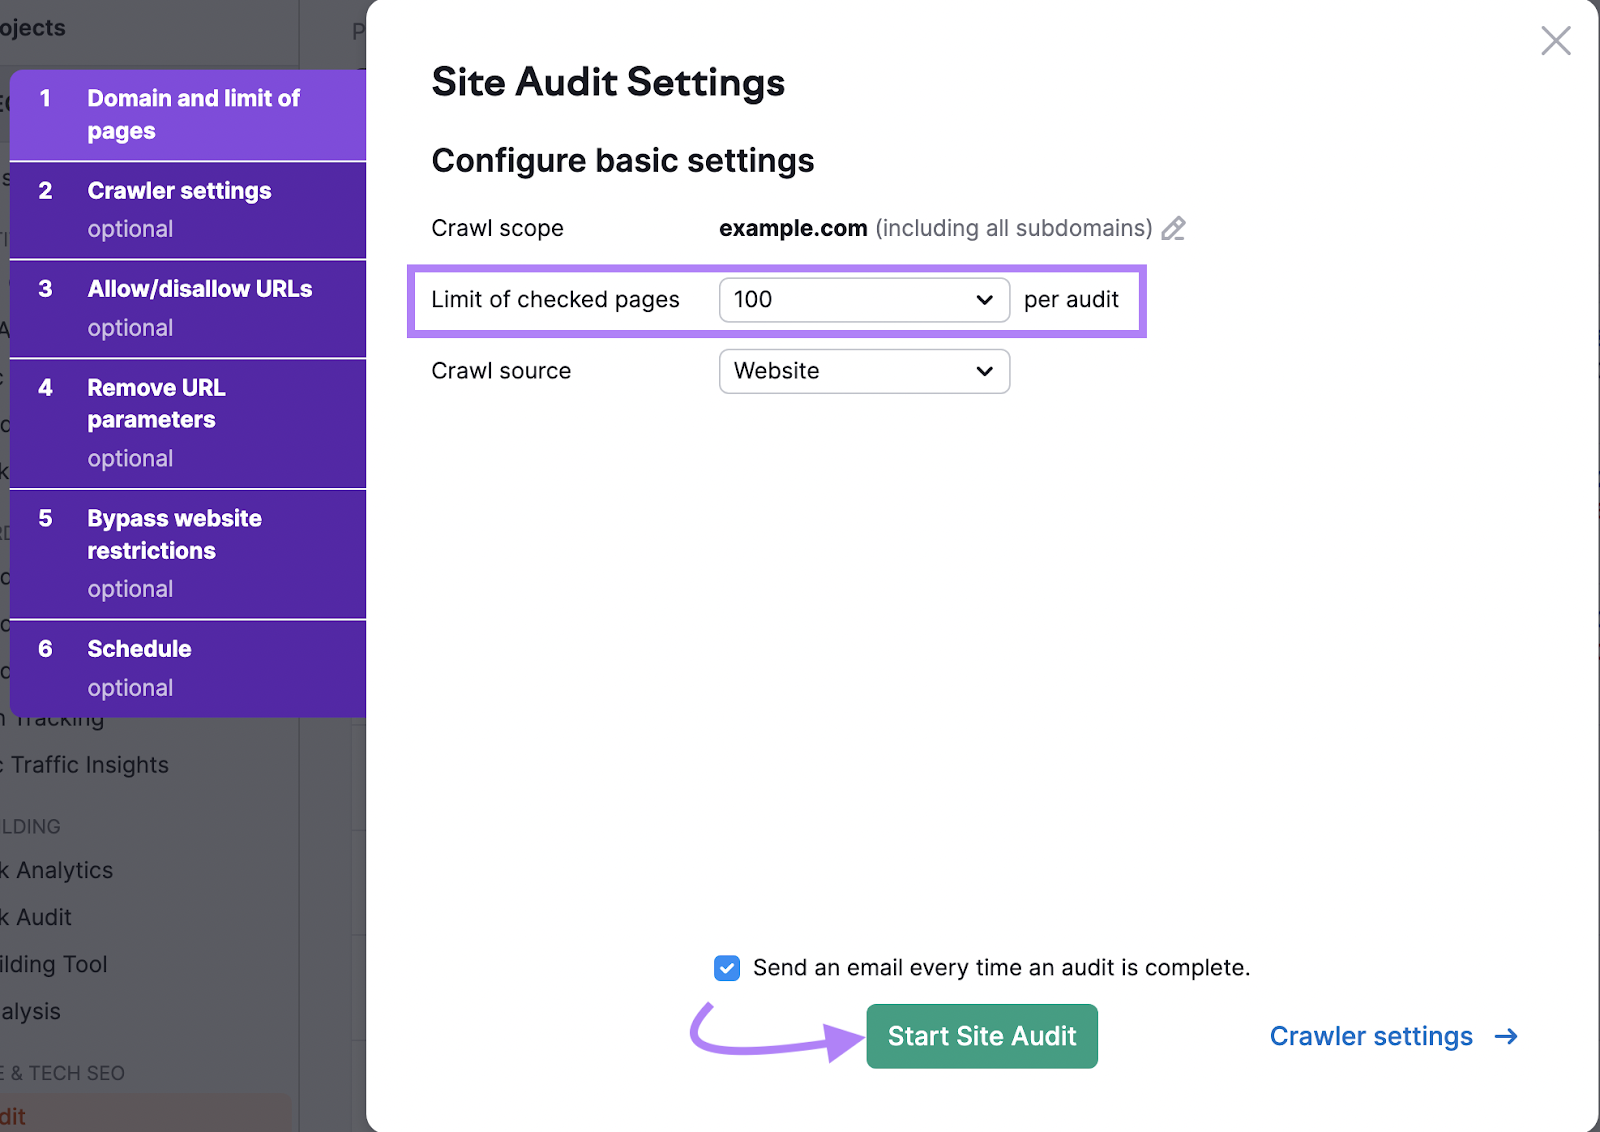 “Site Audit Settings” dialogue box